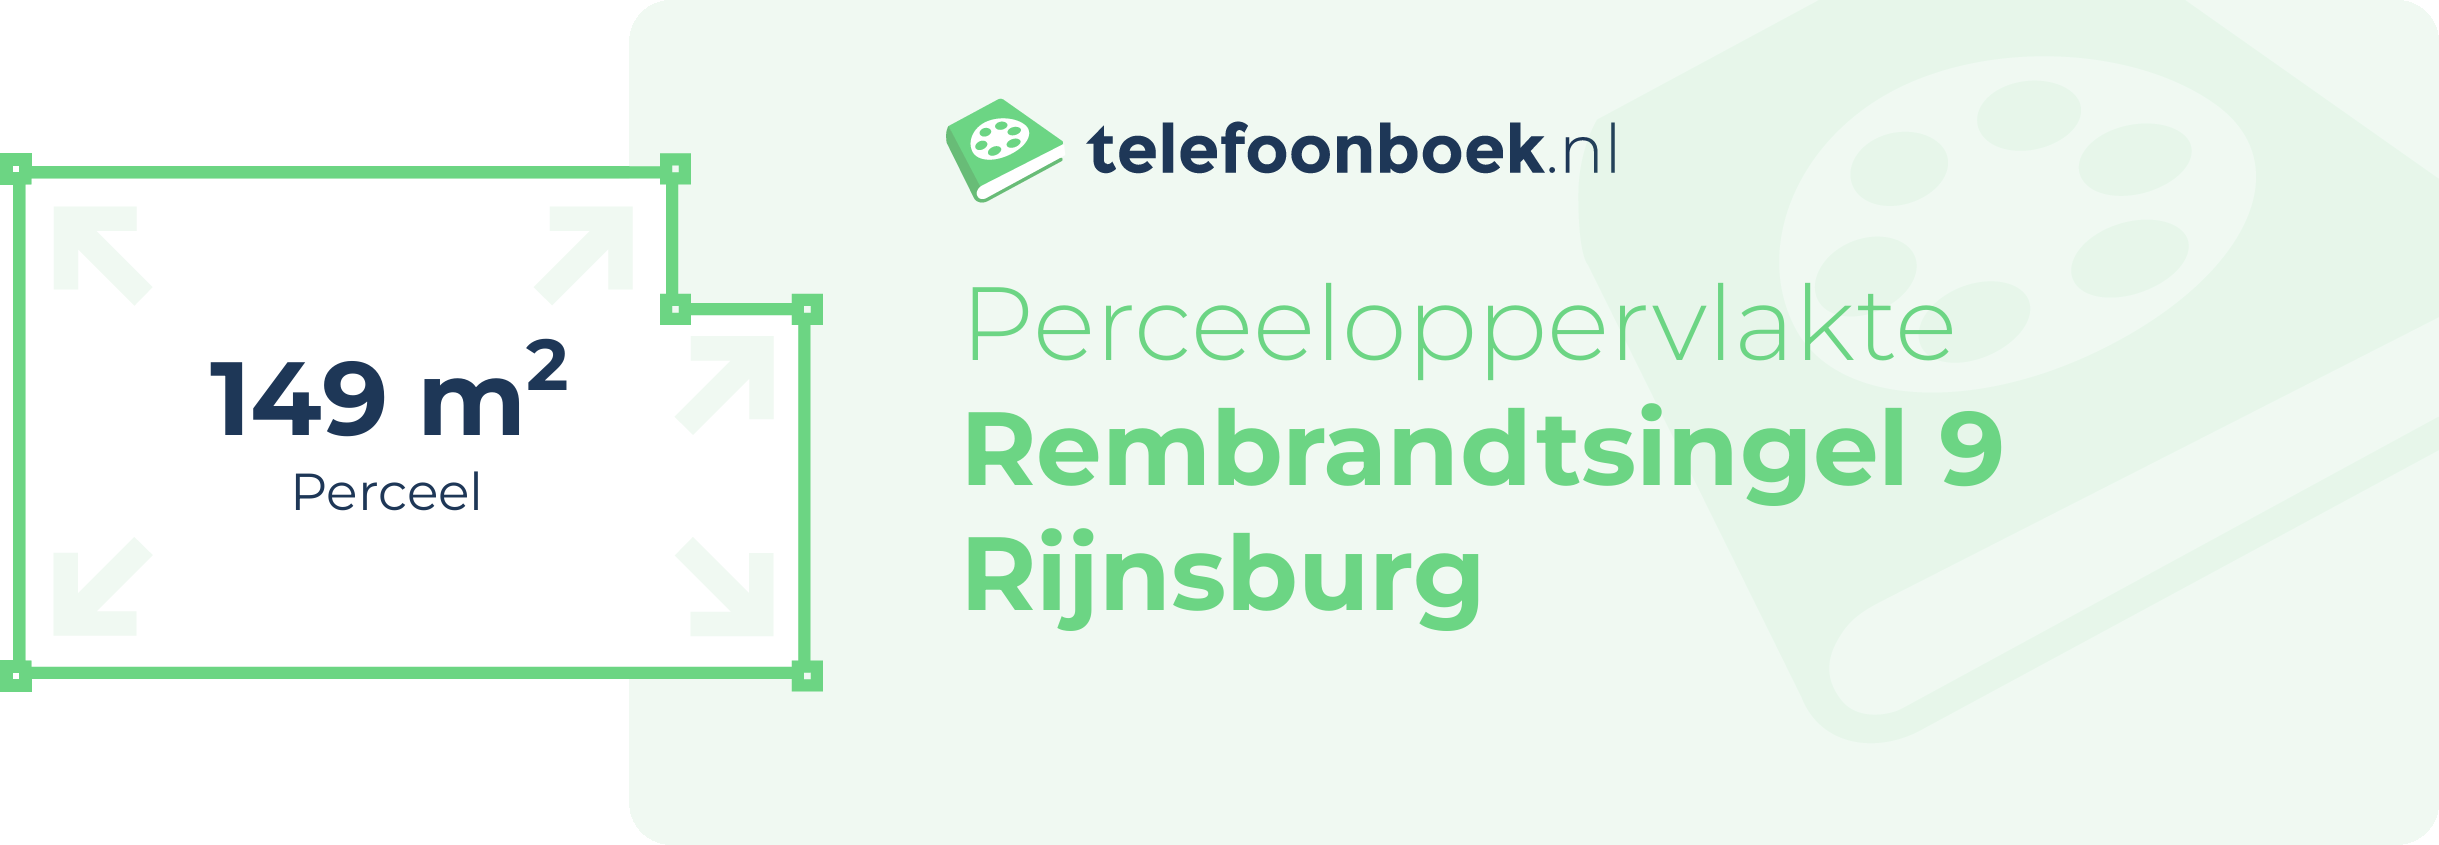 Perceeloppervlakte Rembrandtsingel 9 Rijnsburg